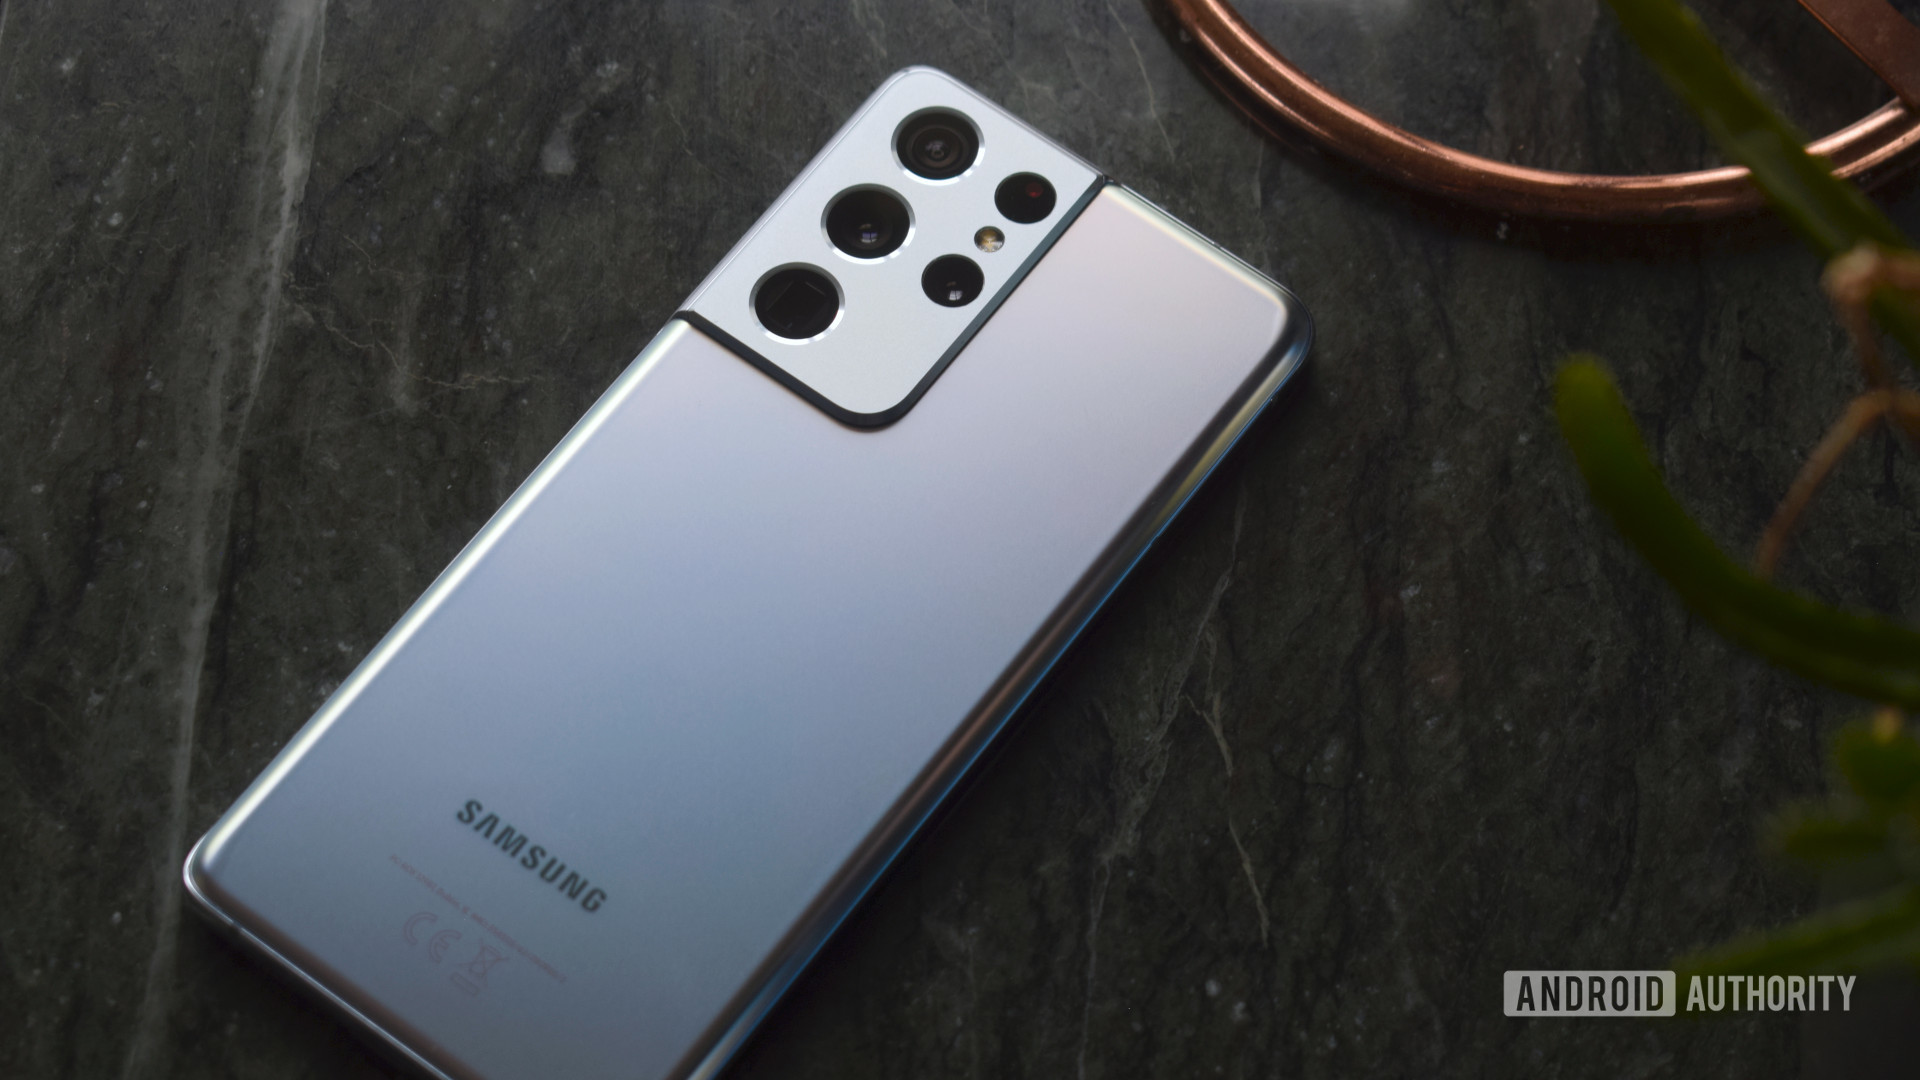 Samsung Galaxy S21 Ultra Silver slate